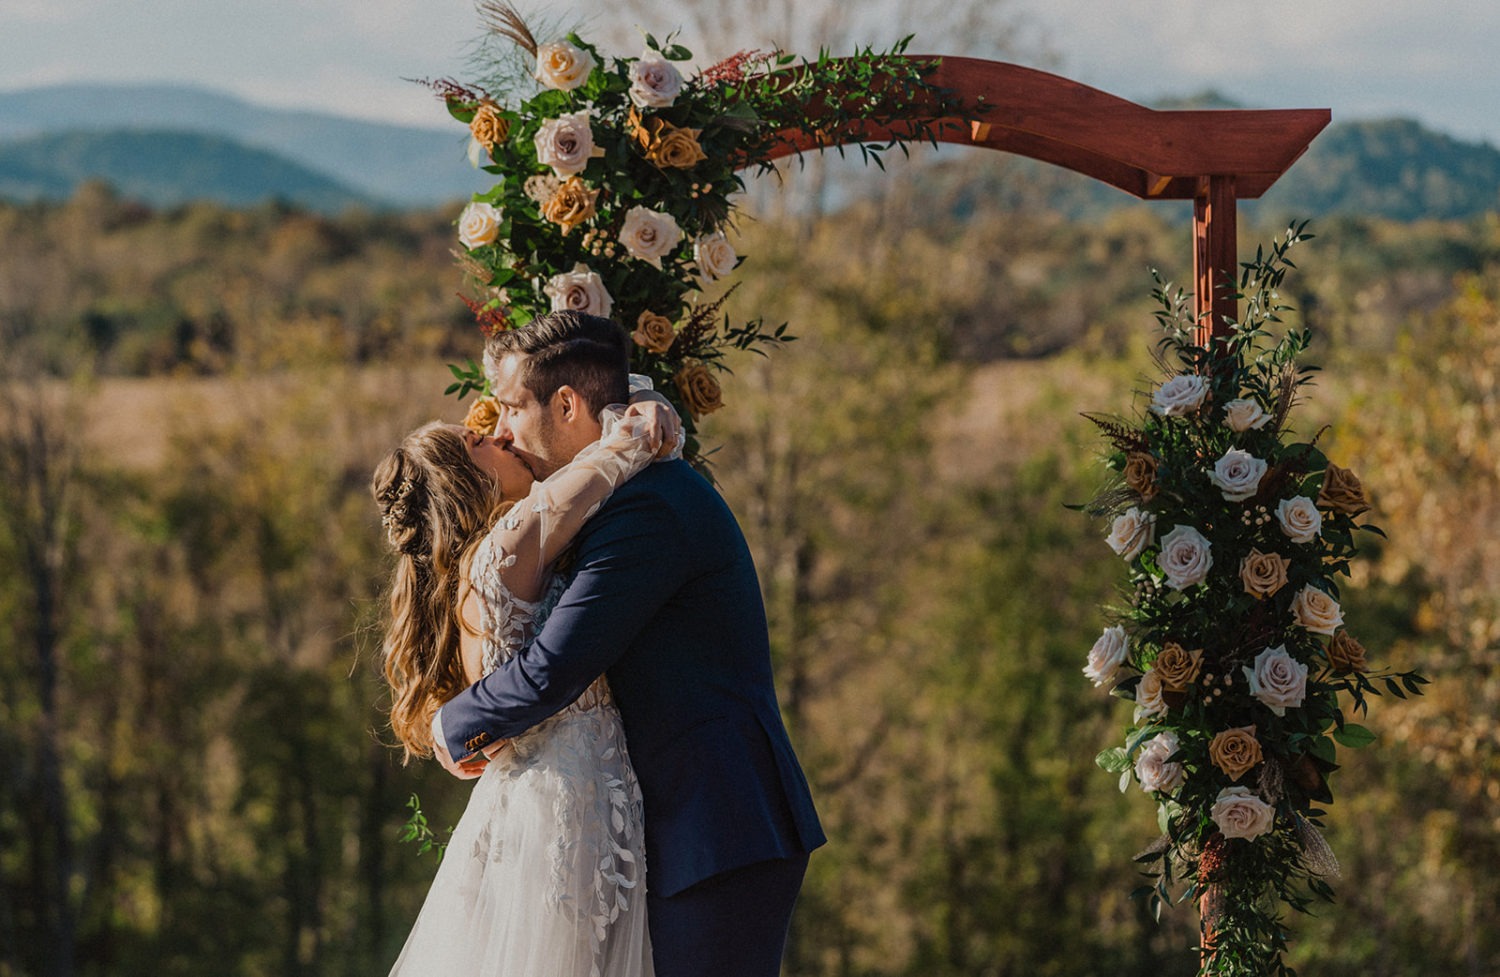 Couple kisses under arch at Virginia backyard wedding